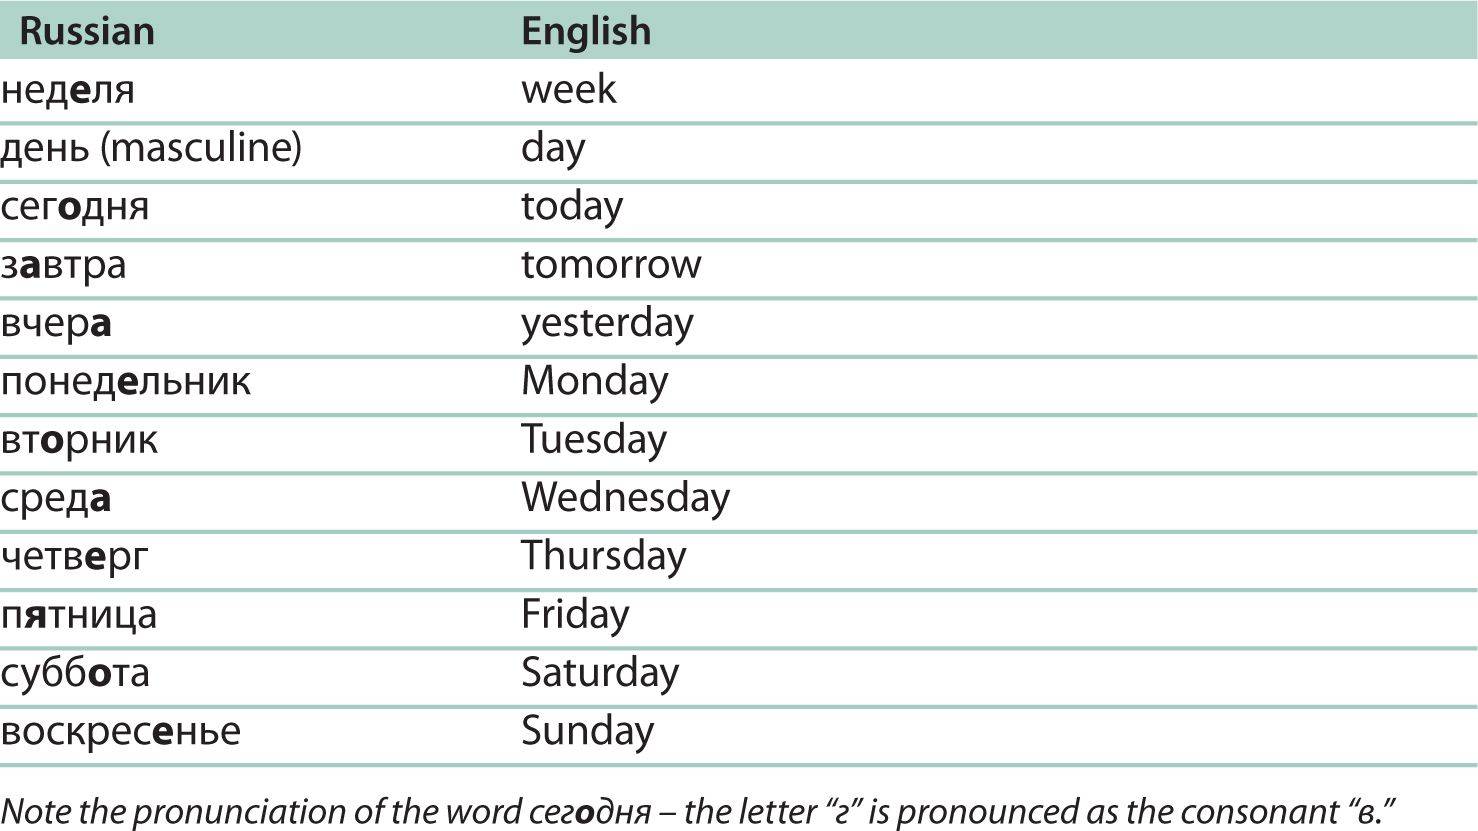 Month русском языке. Месяца на английском языке. Месяца и дни недели на английском языке. Дни недели и месяца по английски. Месяца на англ с транскрипцией.